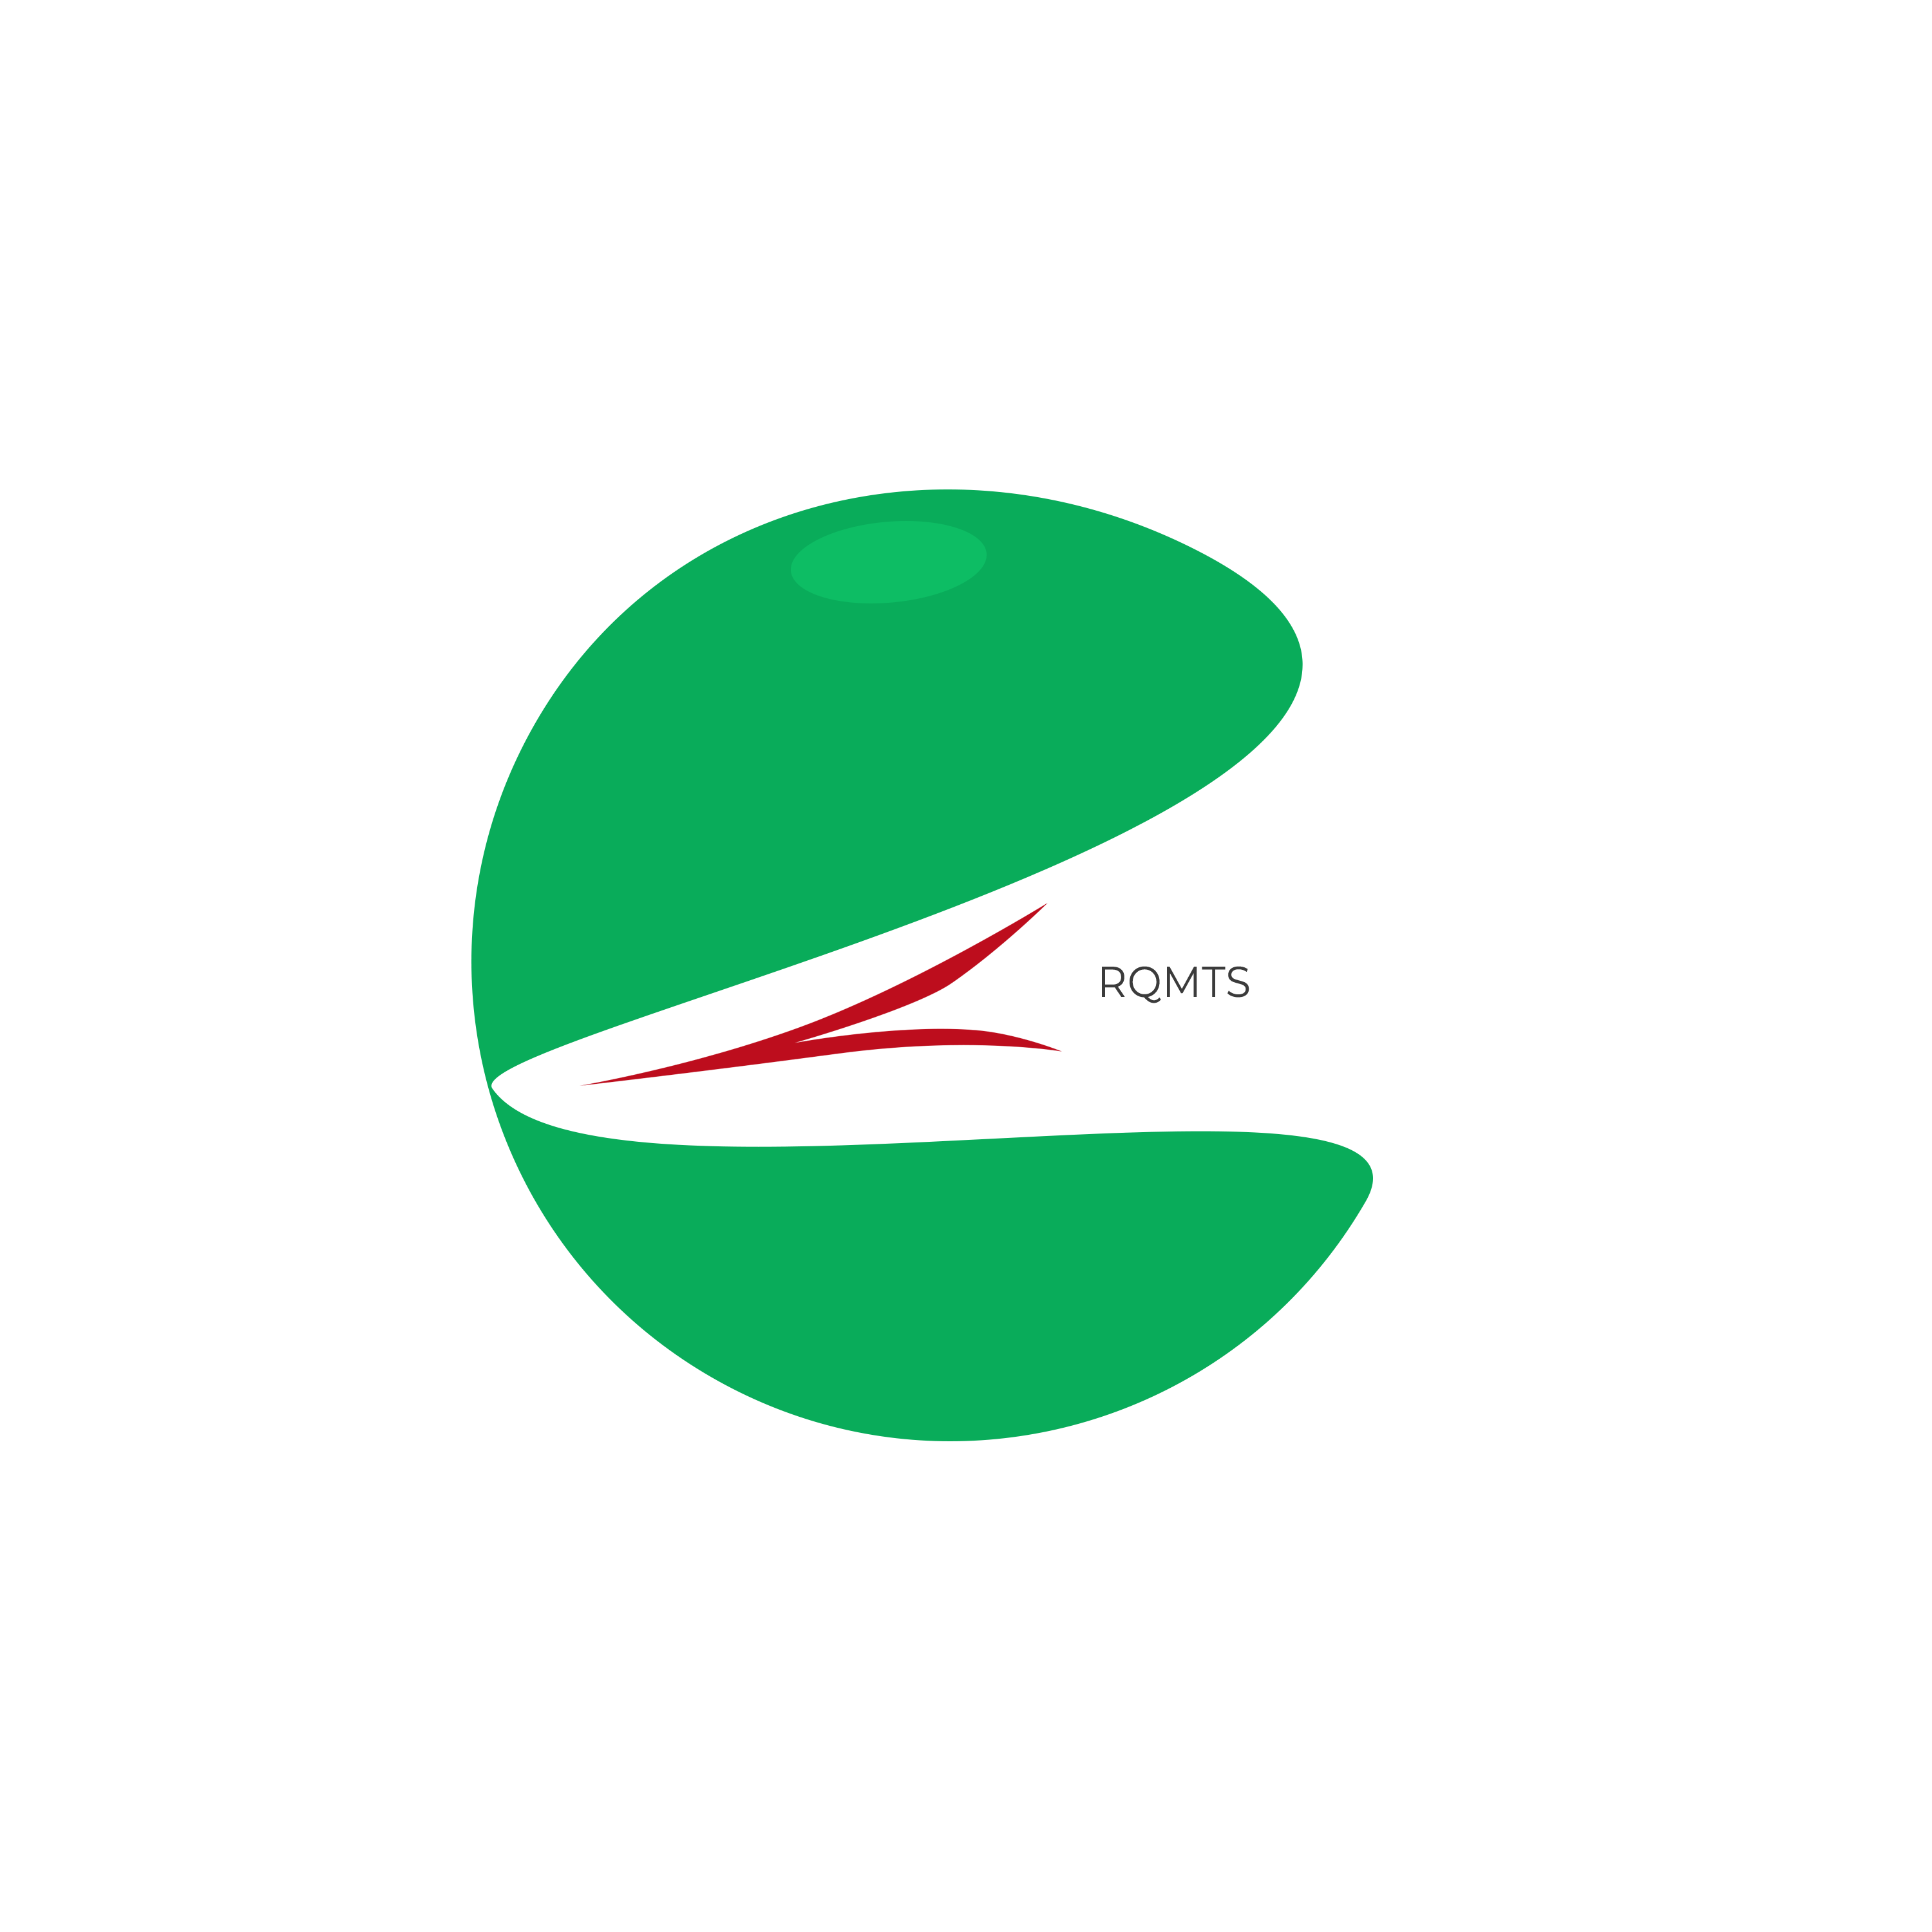 Rqmts logo